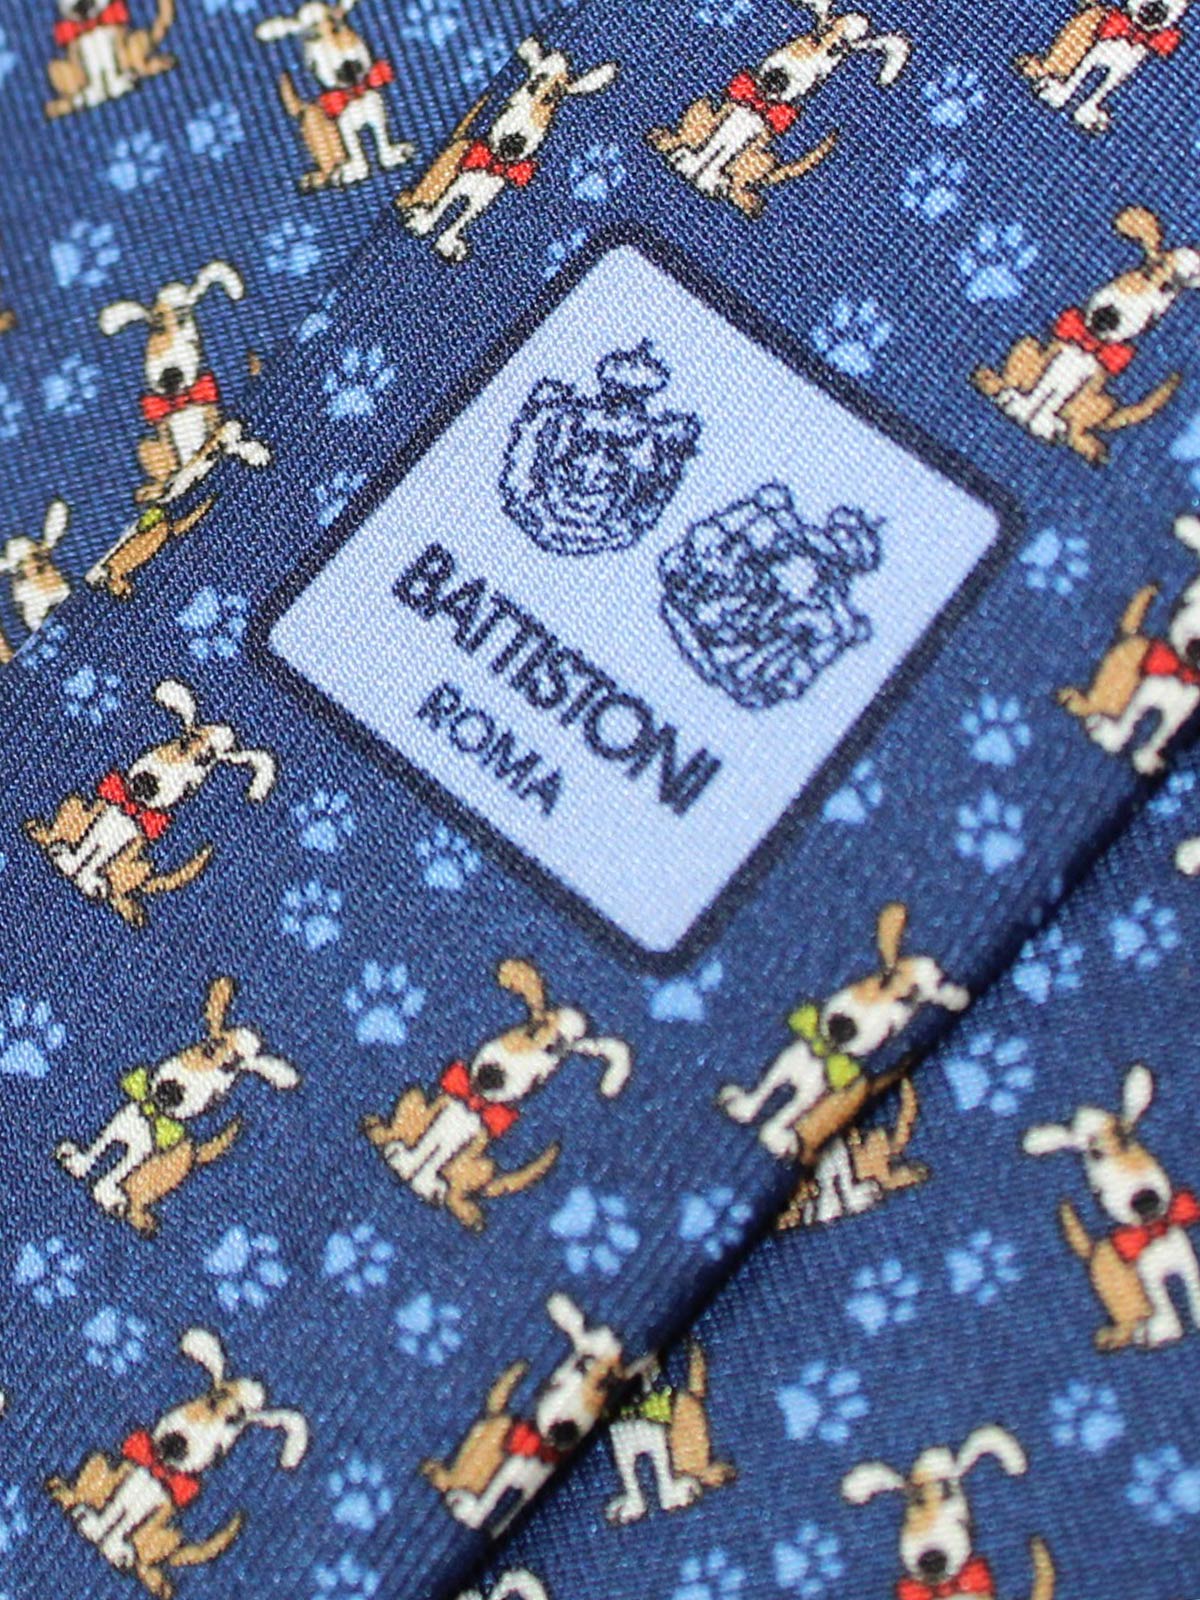 Battistoni Silk Tie Navy Dogs Design